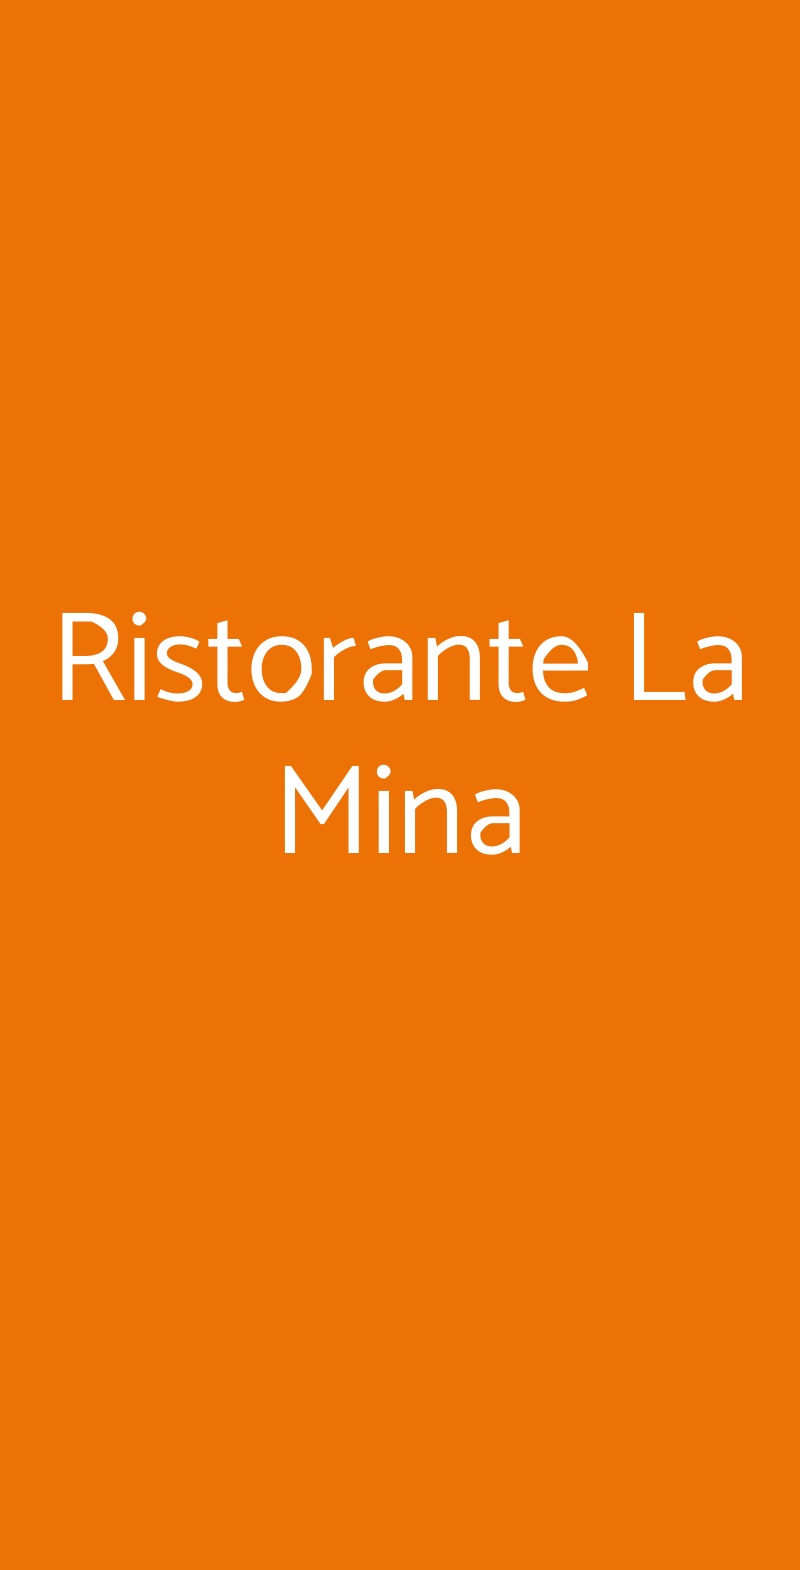 Ristorante La Mina Torino menù 1 pagina